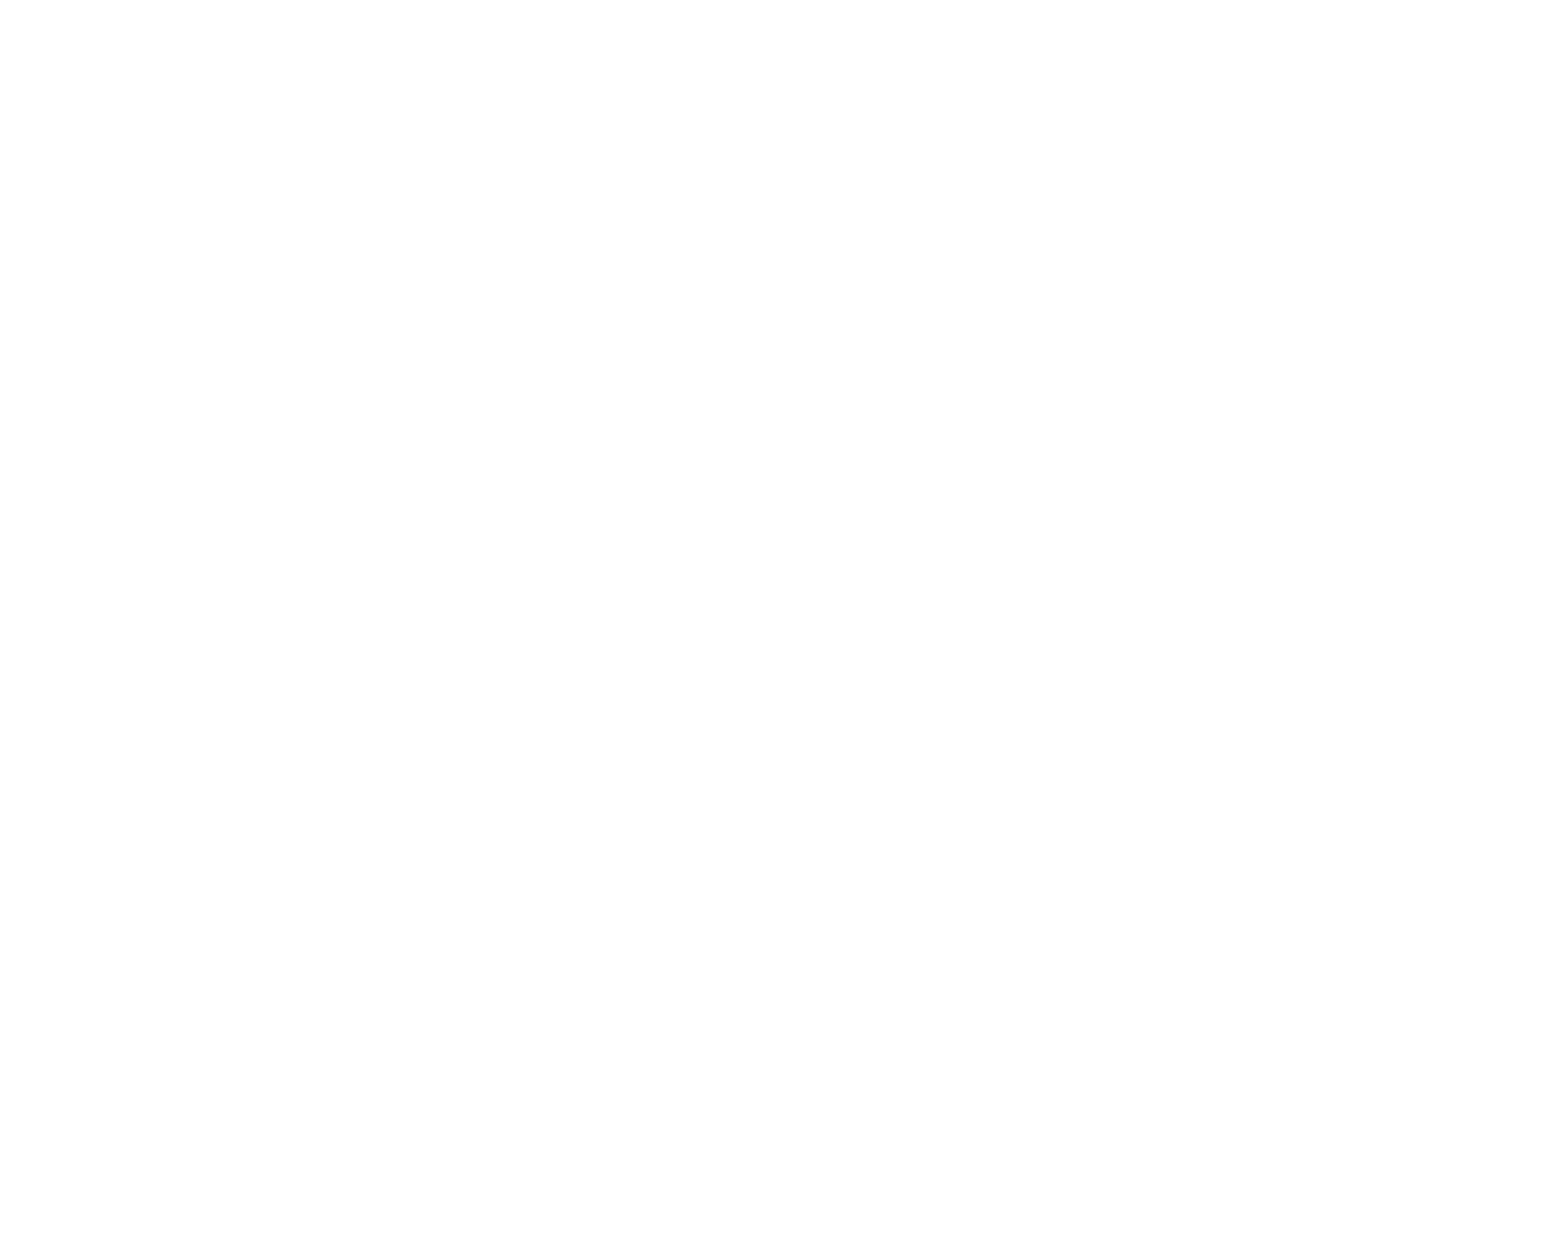 Honda logo pour fonds sombres (PNG transparent)